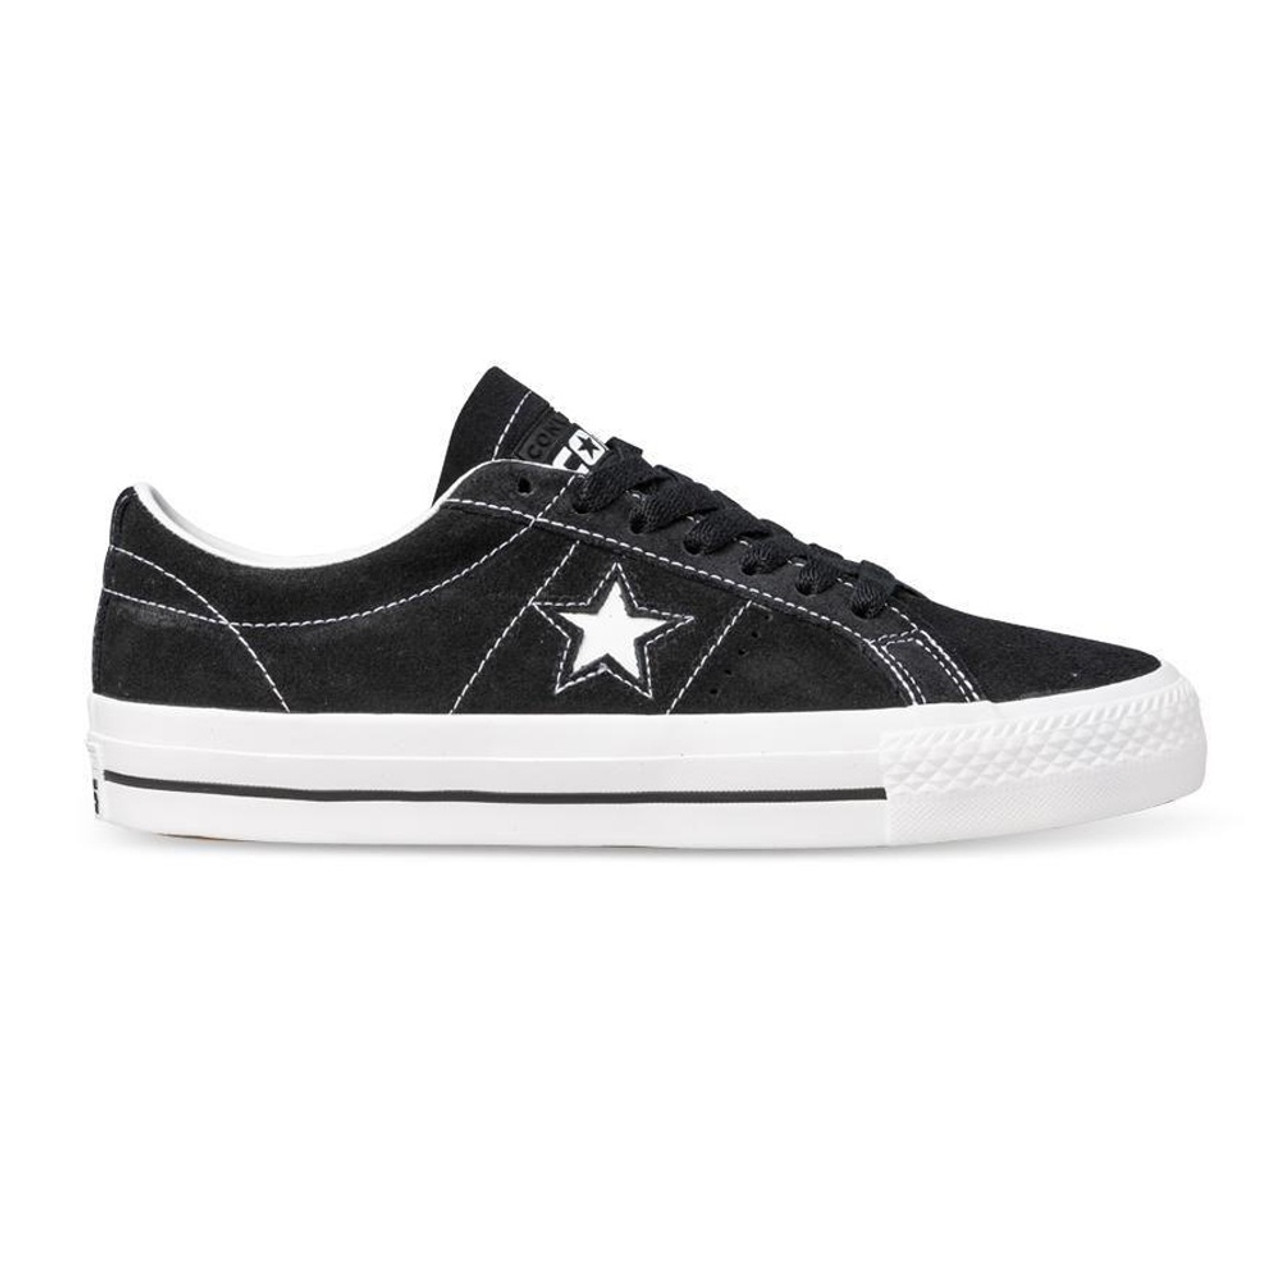 CONVERSE One Star Pro Shoes Black/Black/White - Trilogy Skateboards